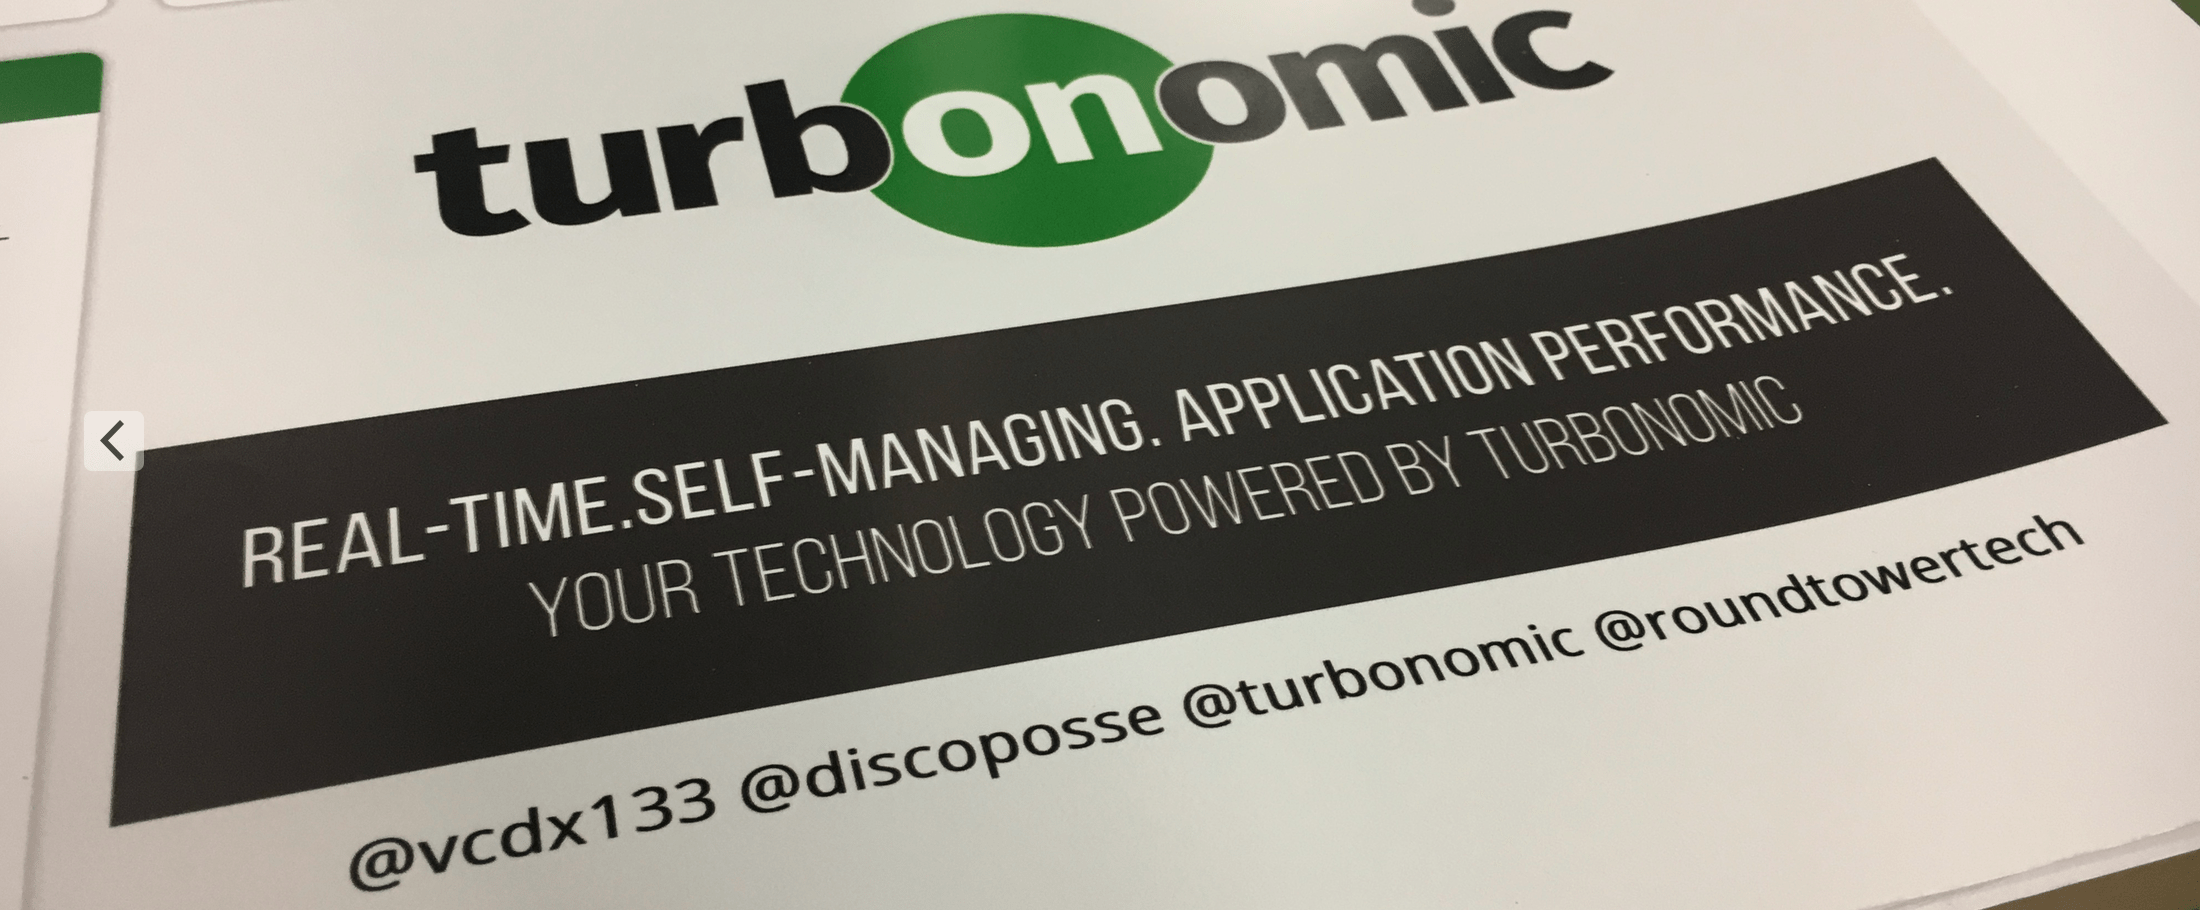 Turbonomic Logo - Turbonomic Technical Poster Goodness | DiscoPosse.com